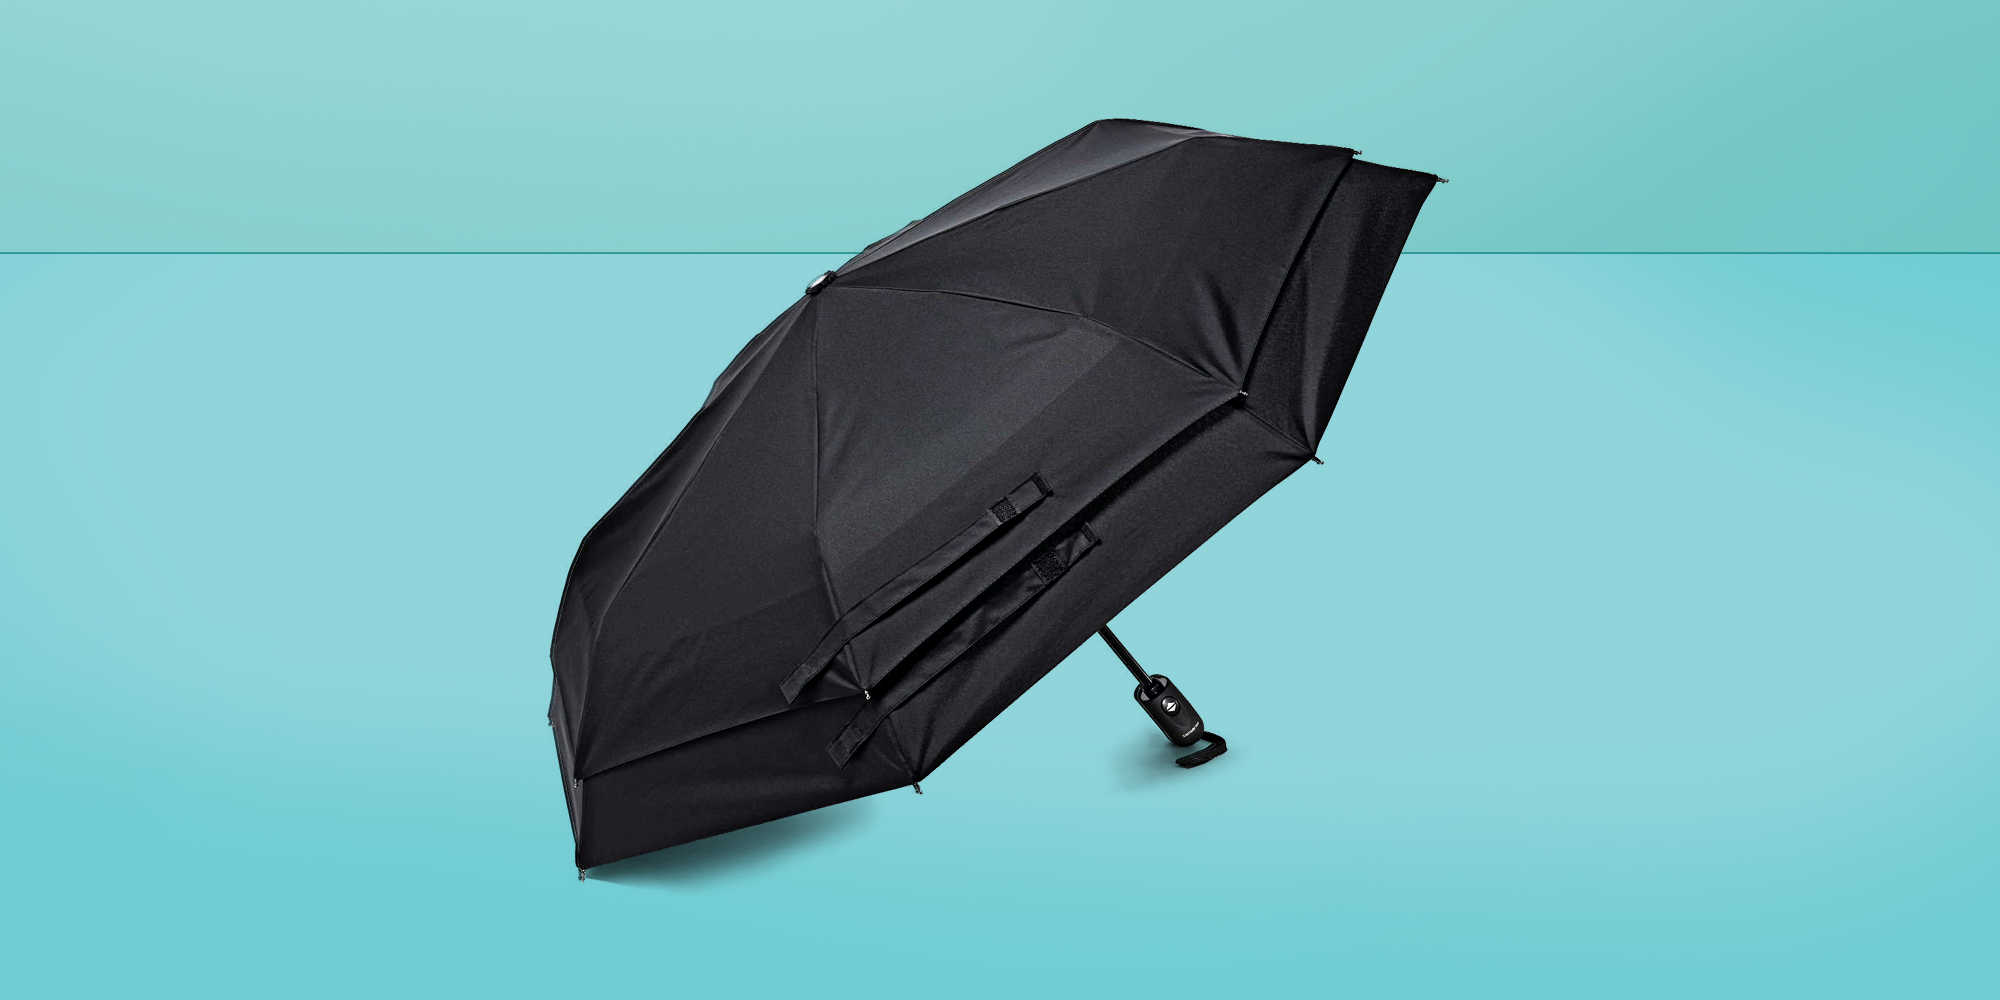 Windproof Compact Travel Umbrella Sunshade Umbrella Rounded-Corner Folding Umbrella- Automatic Open & Close Button UV Protection Sun & Rain Umbrella with 8 Ribs Construction 